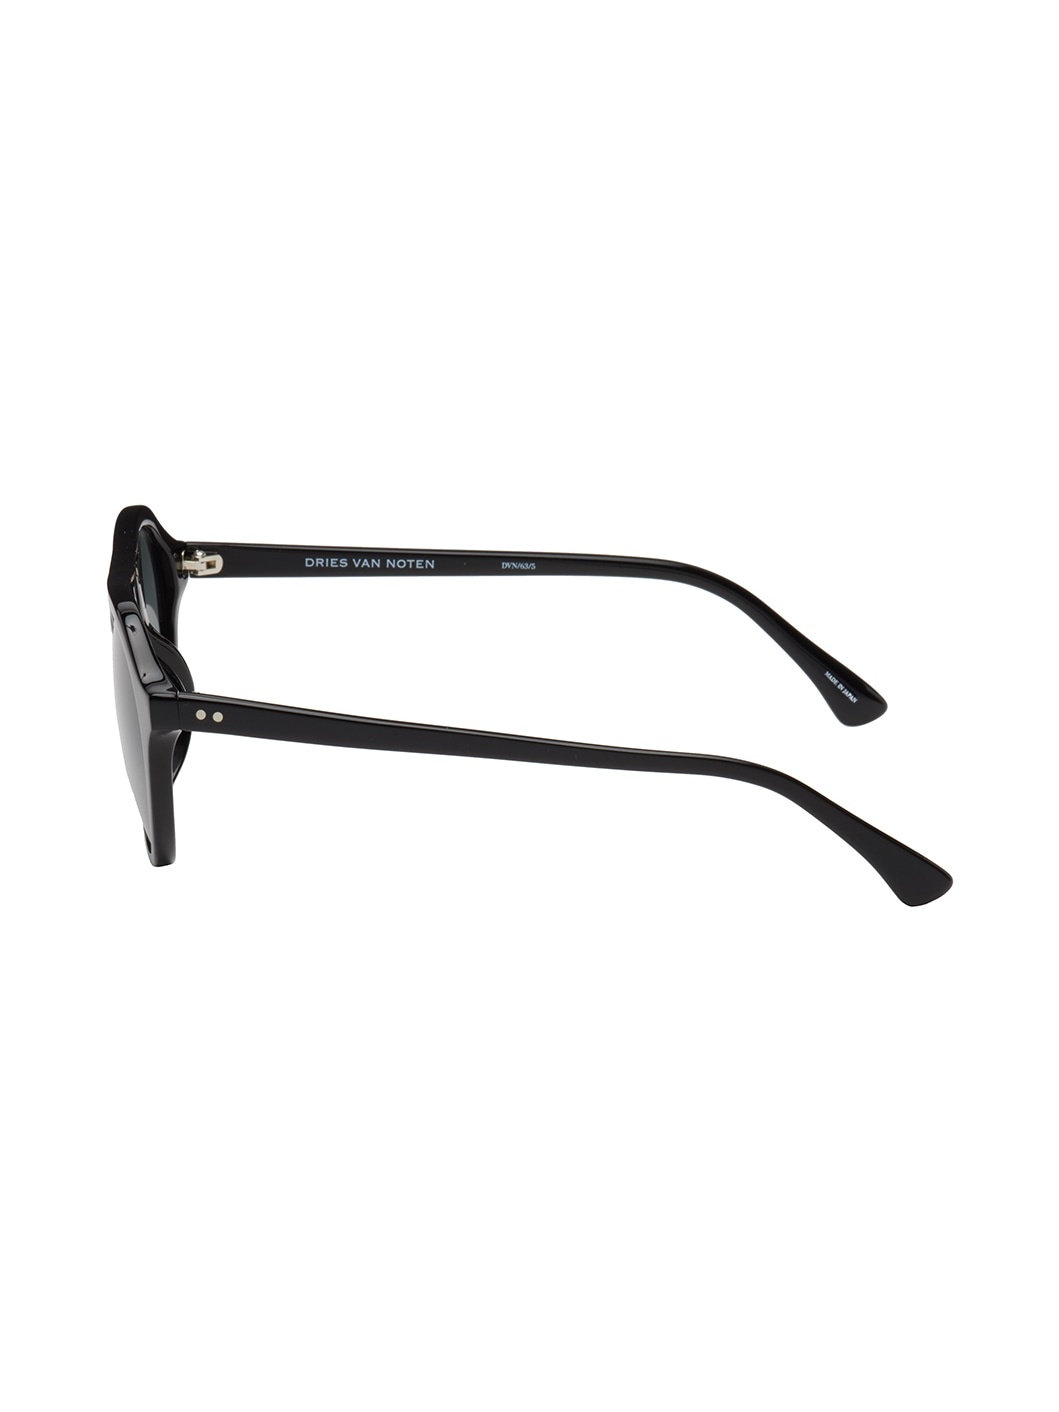 Black Linda Farrow Edition 63 C5 Sunglasses - 3